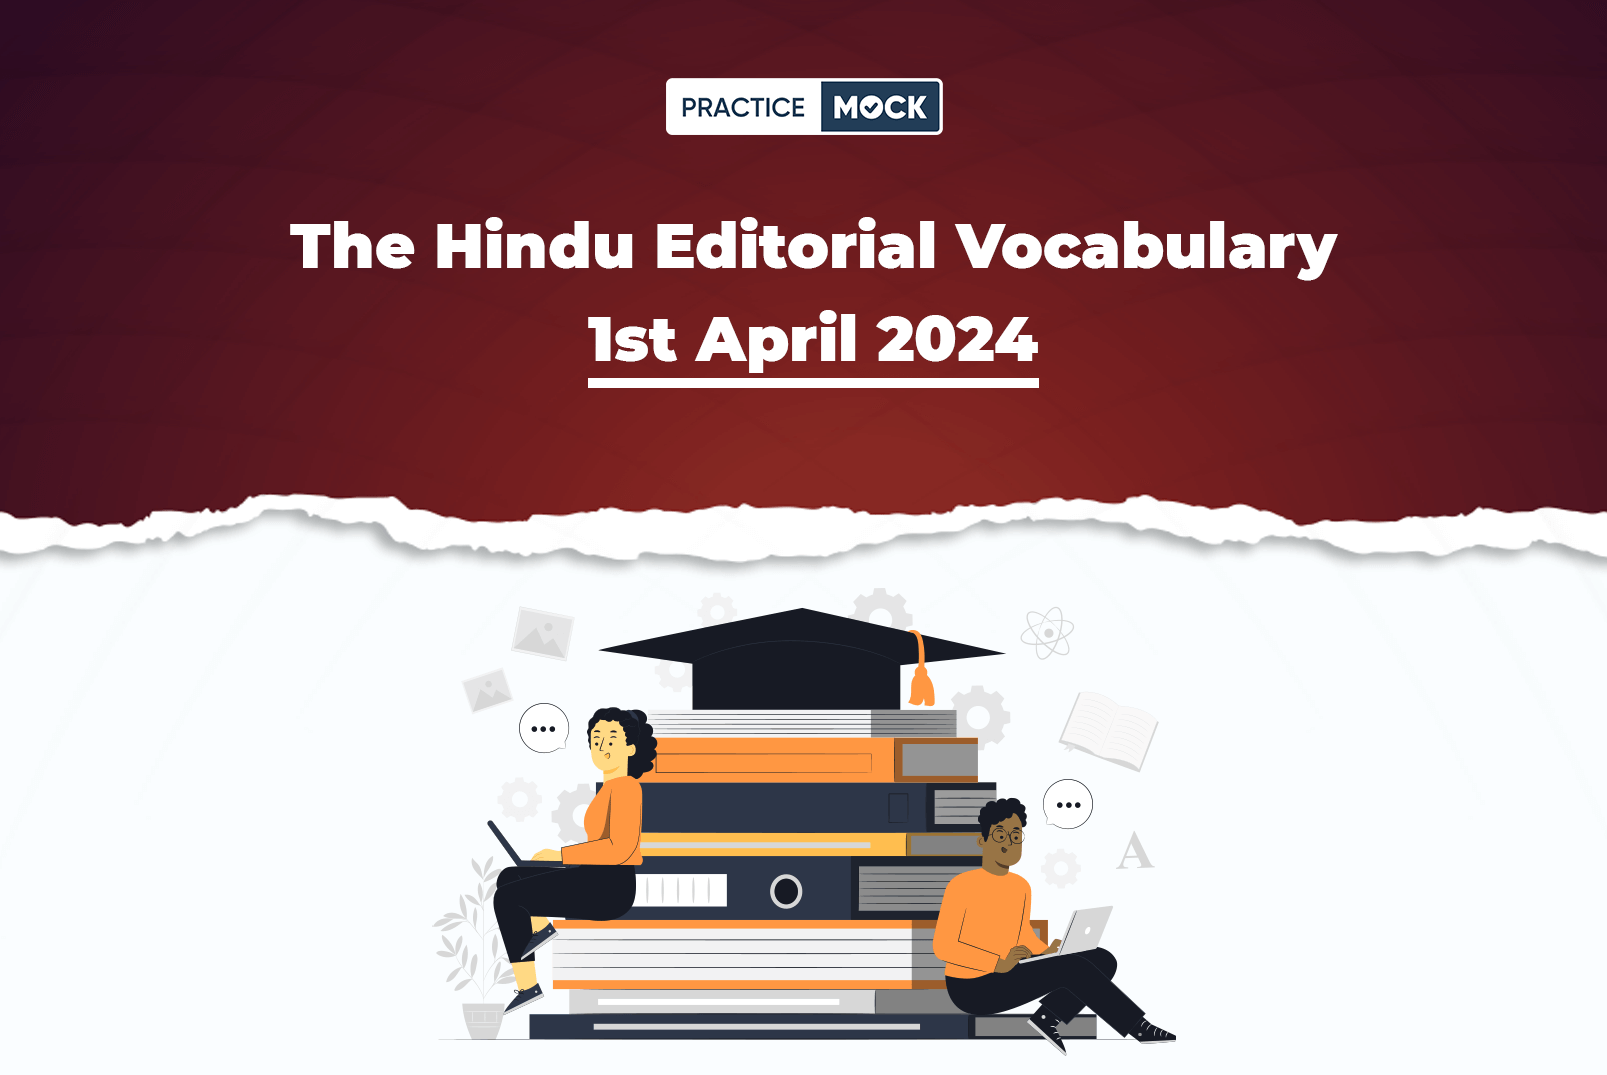 The Hindu Editorial Vocabulary 1st April 2024